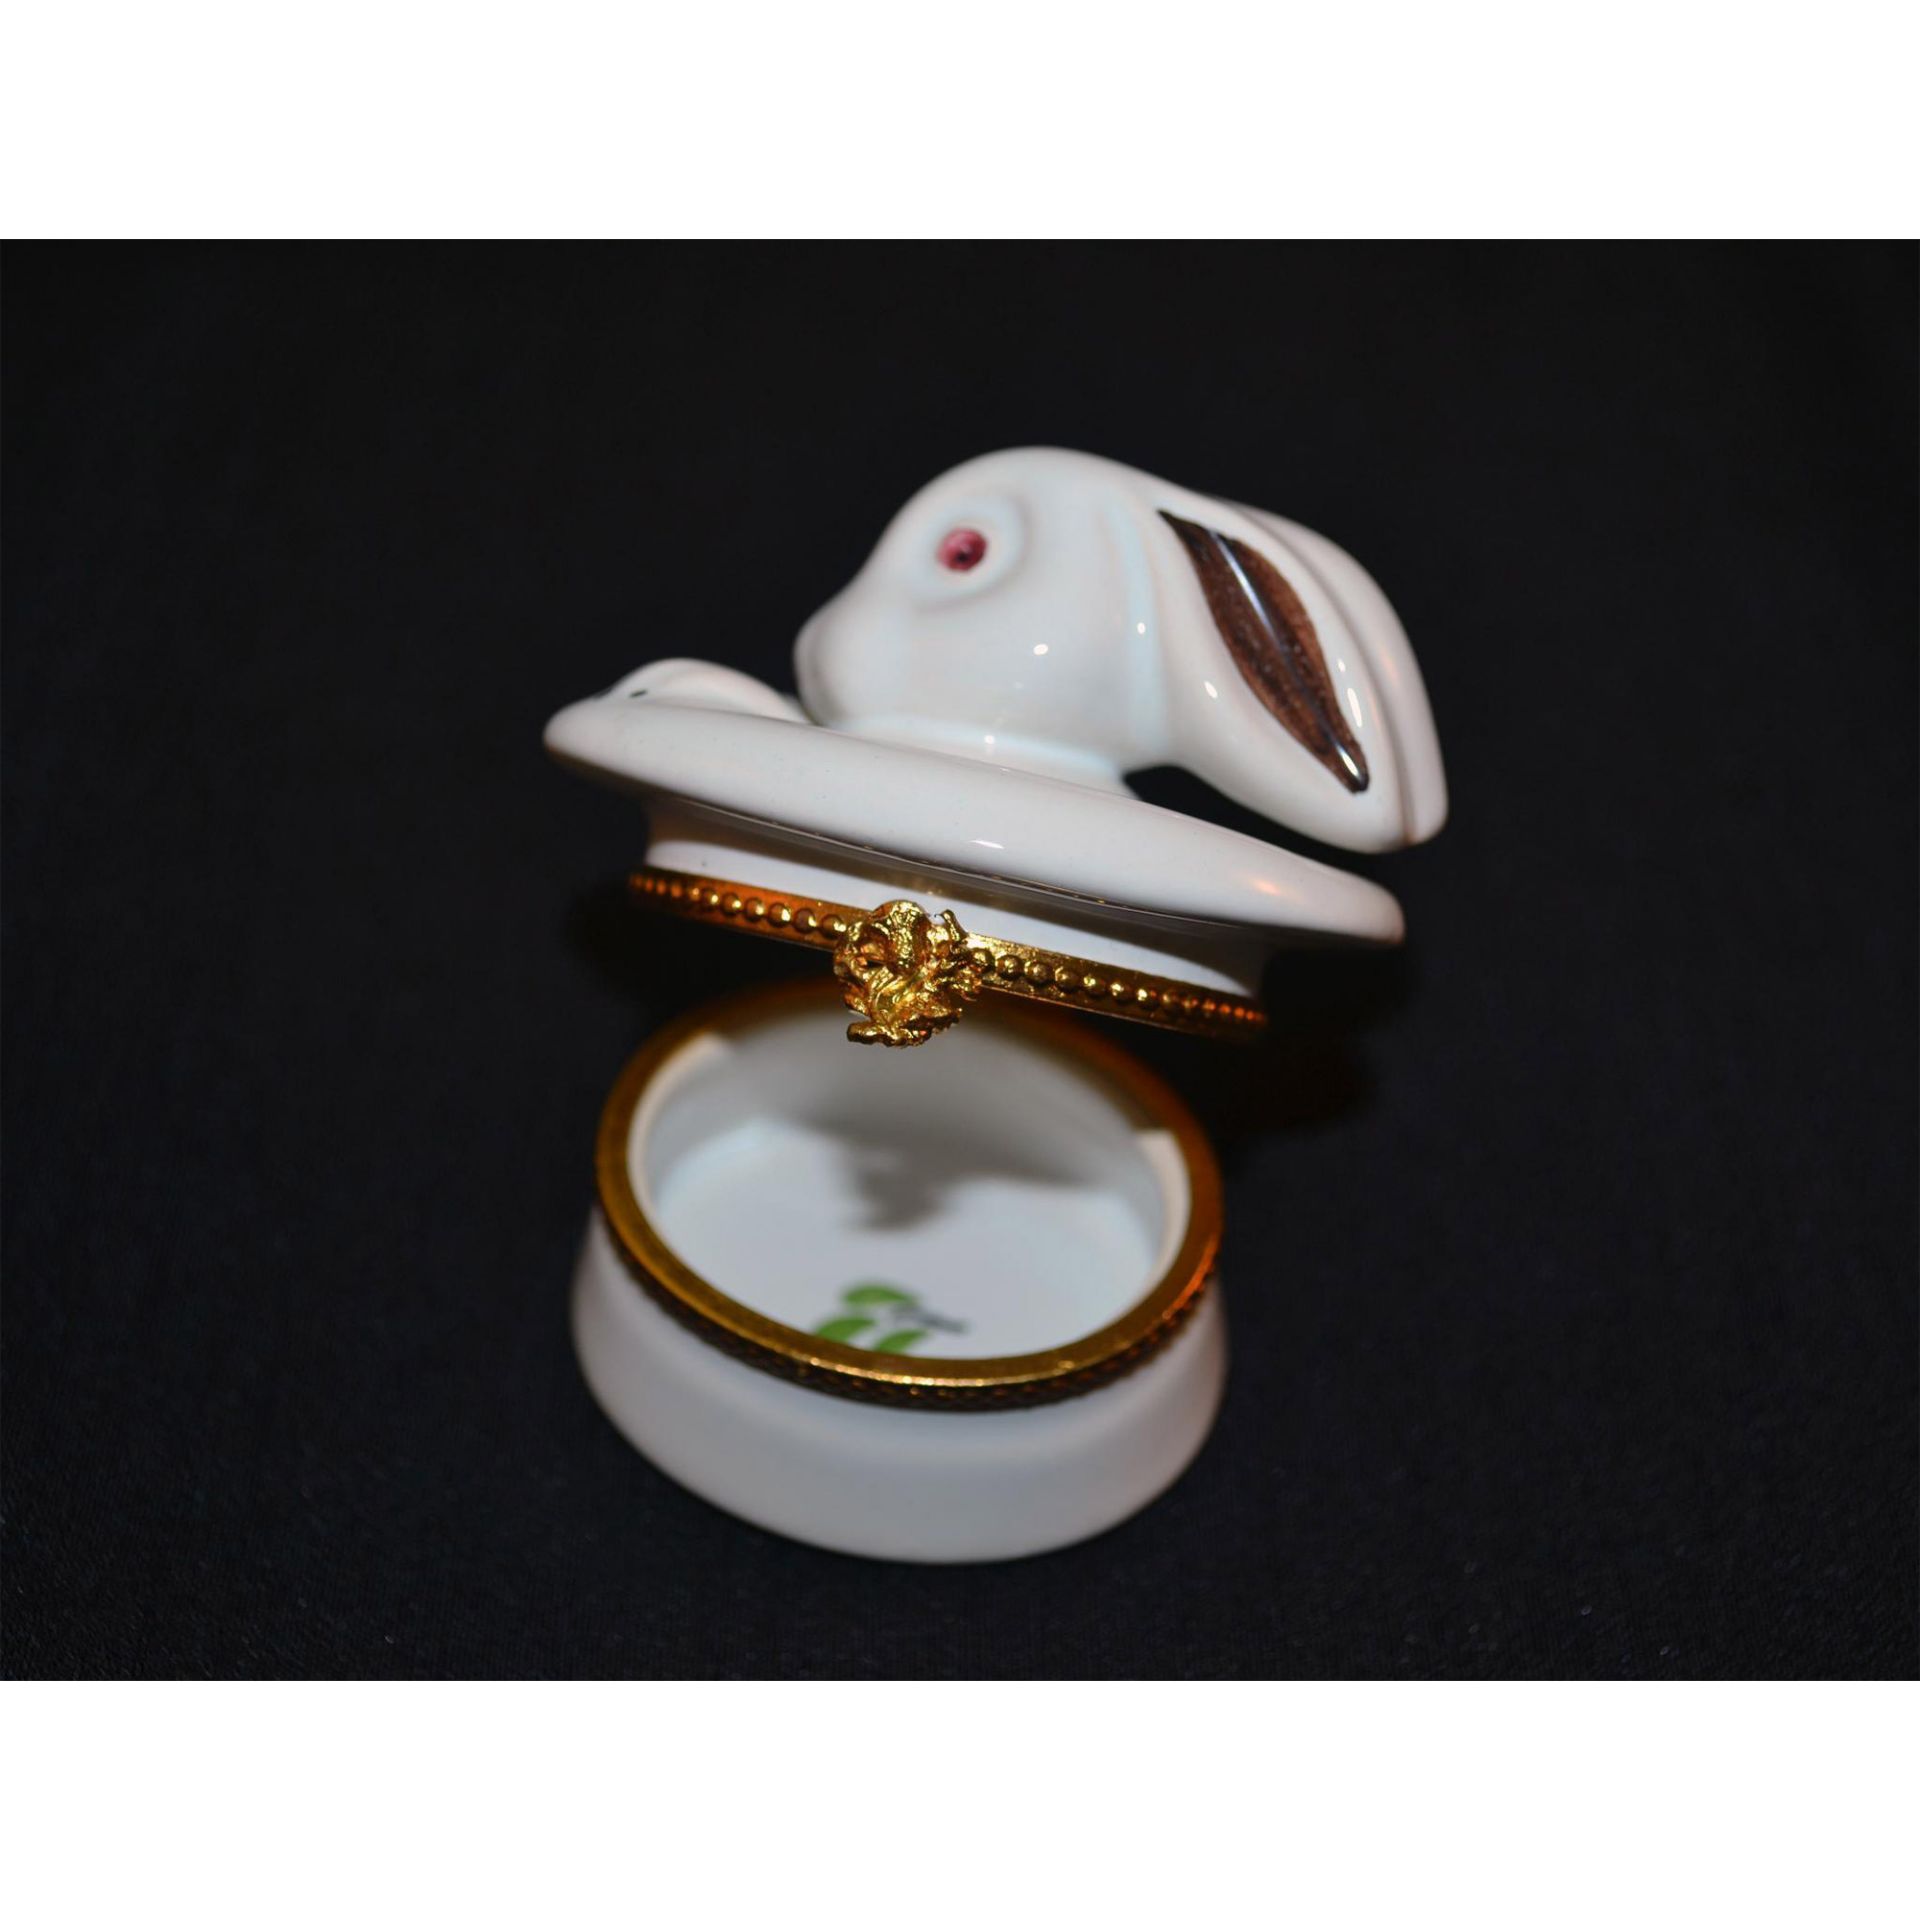 Rochard Limoges Porcelain Bunny Box - Image 4 of 5